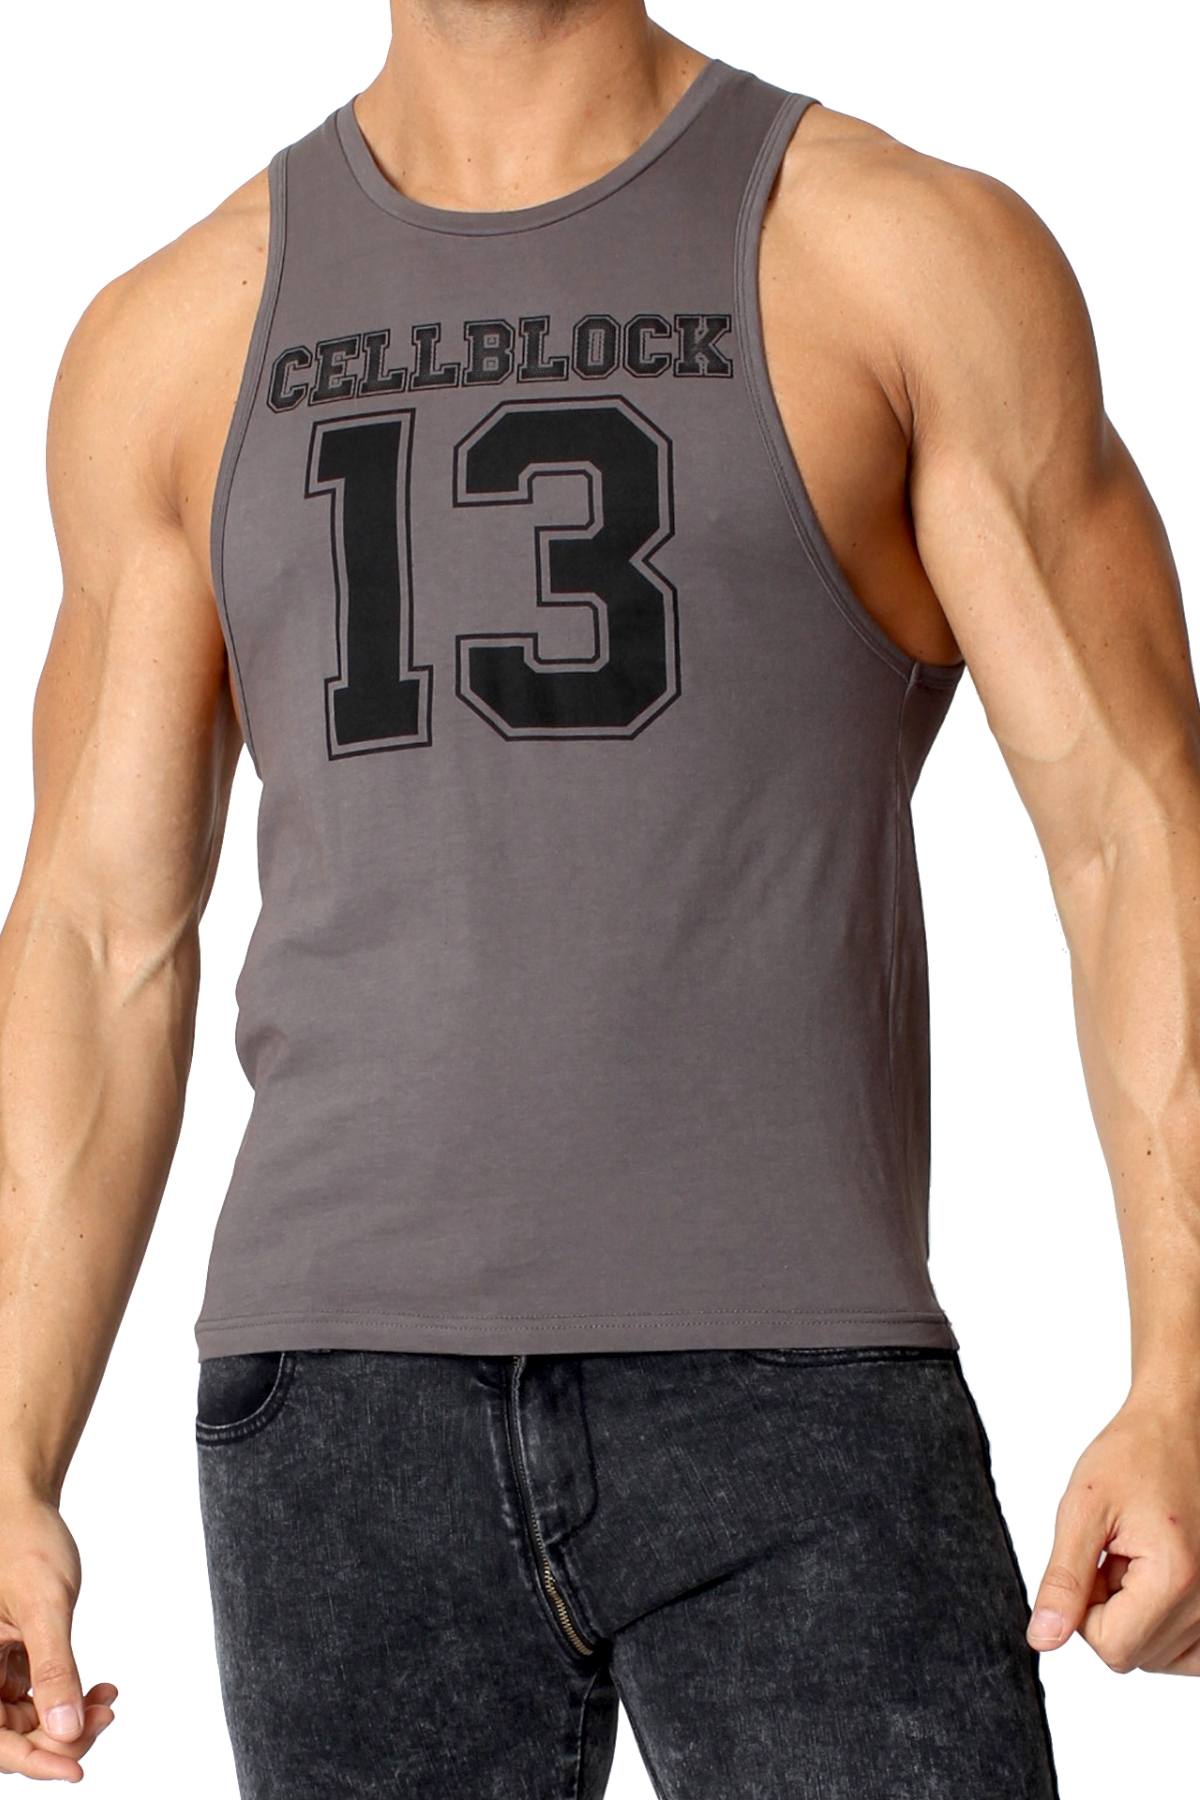 CellBlock 13 Grey Stadium Tank